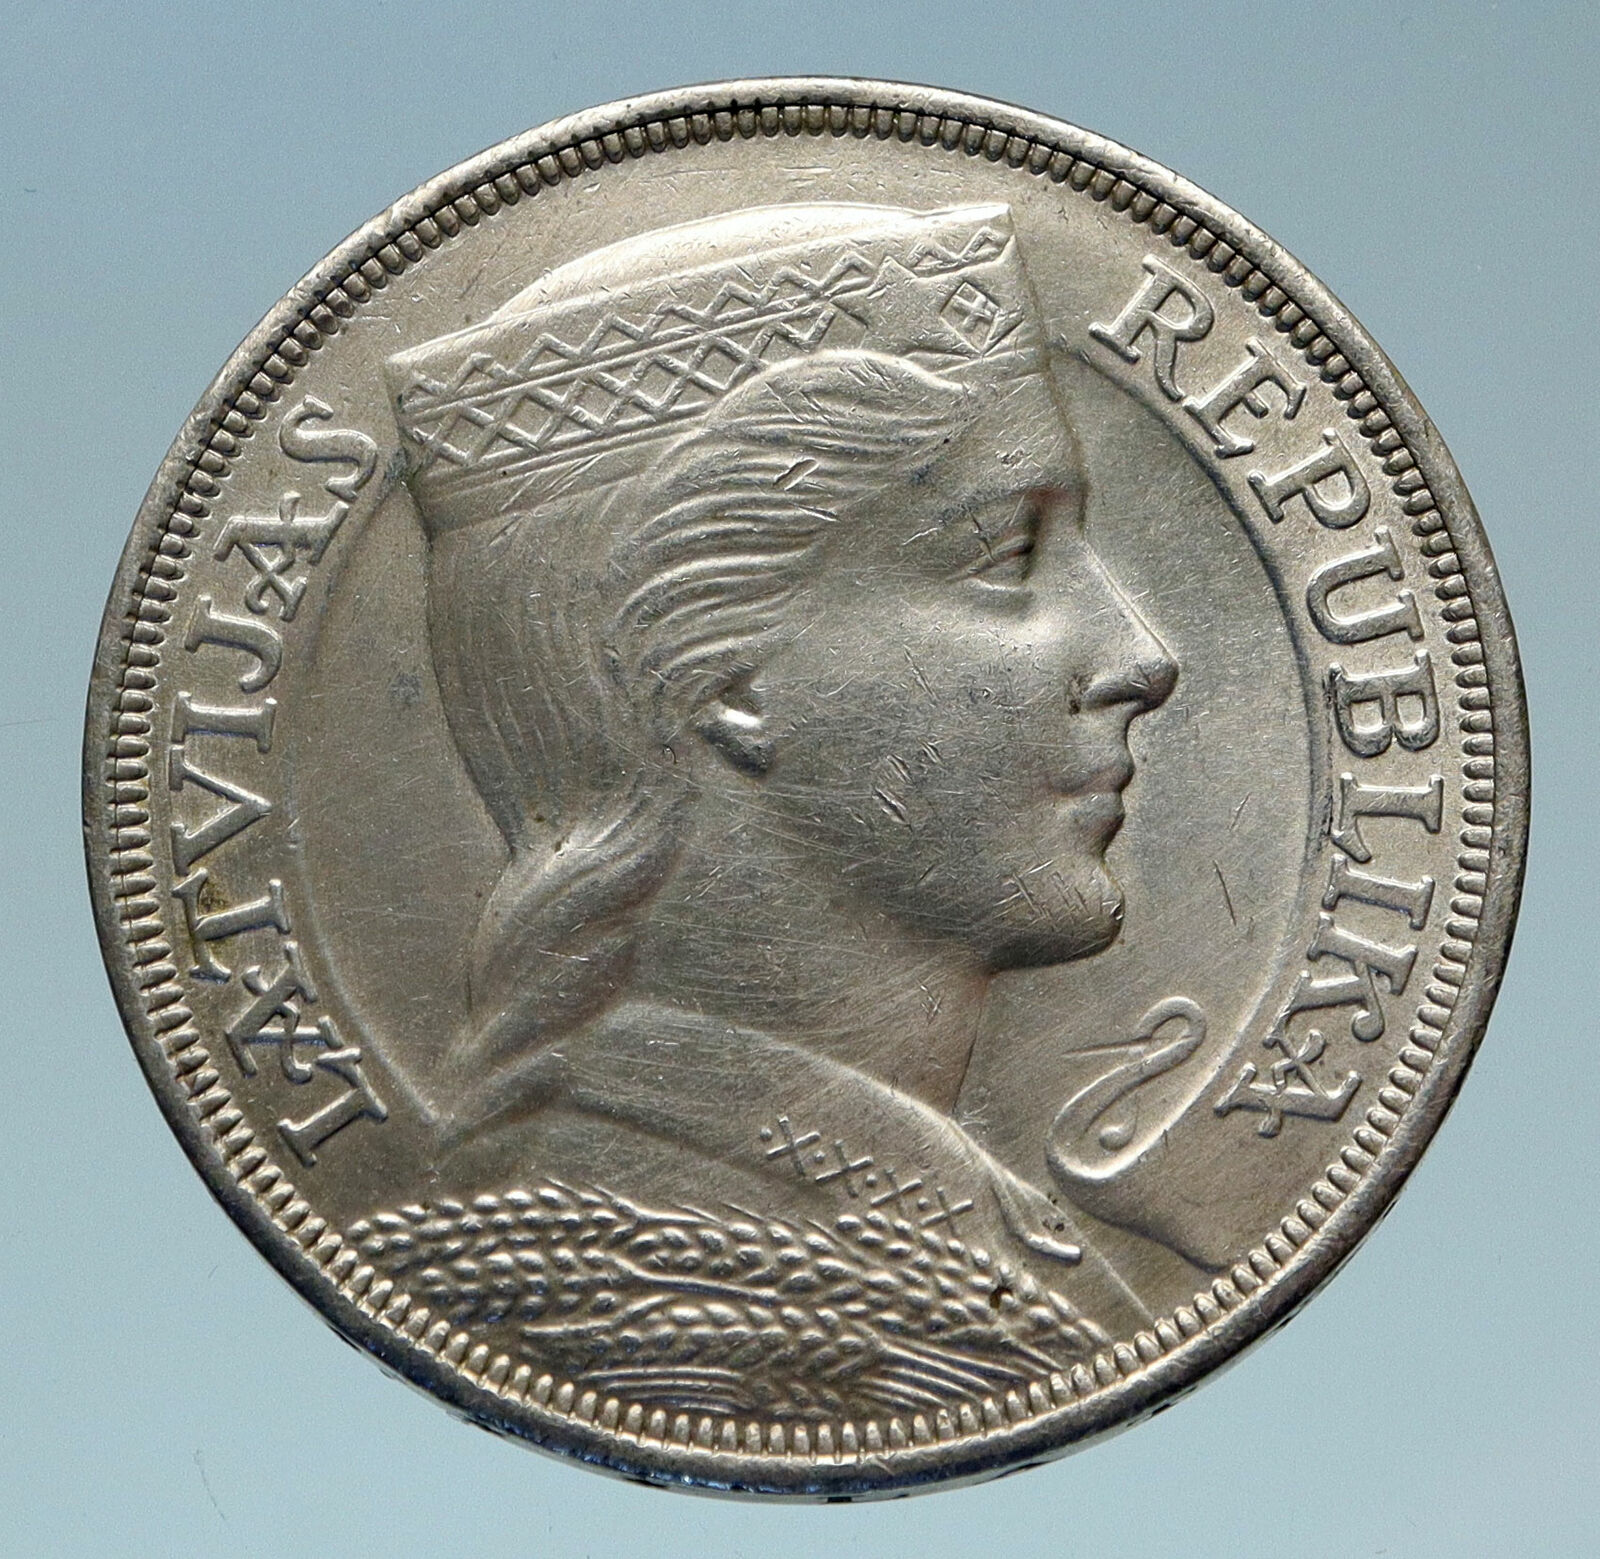 1931 LATVIA w Female Headwear 5 Lati LARGE Vintage Silver European Coin i82732